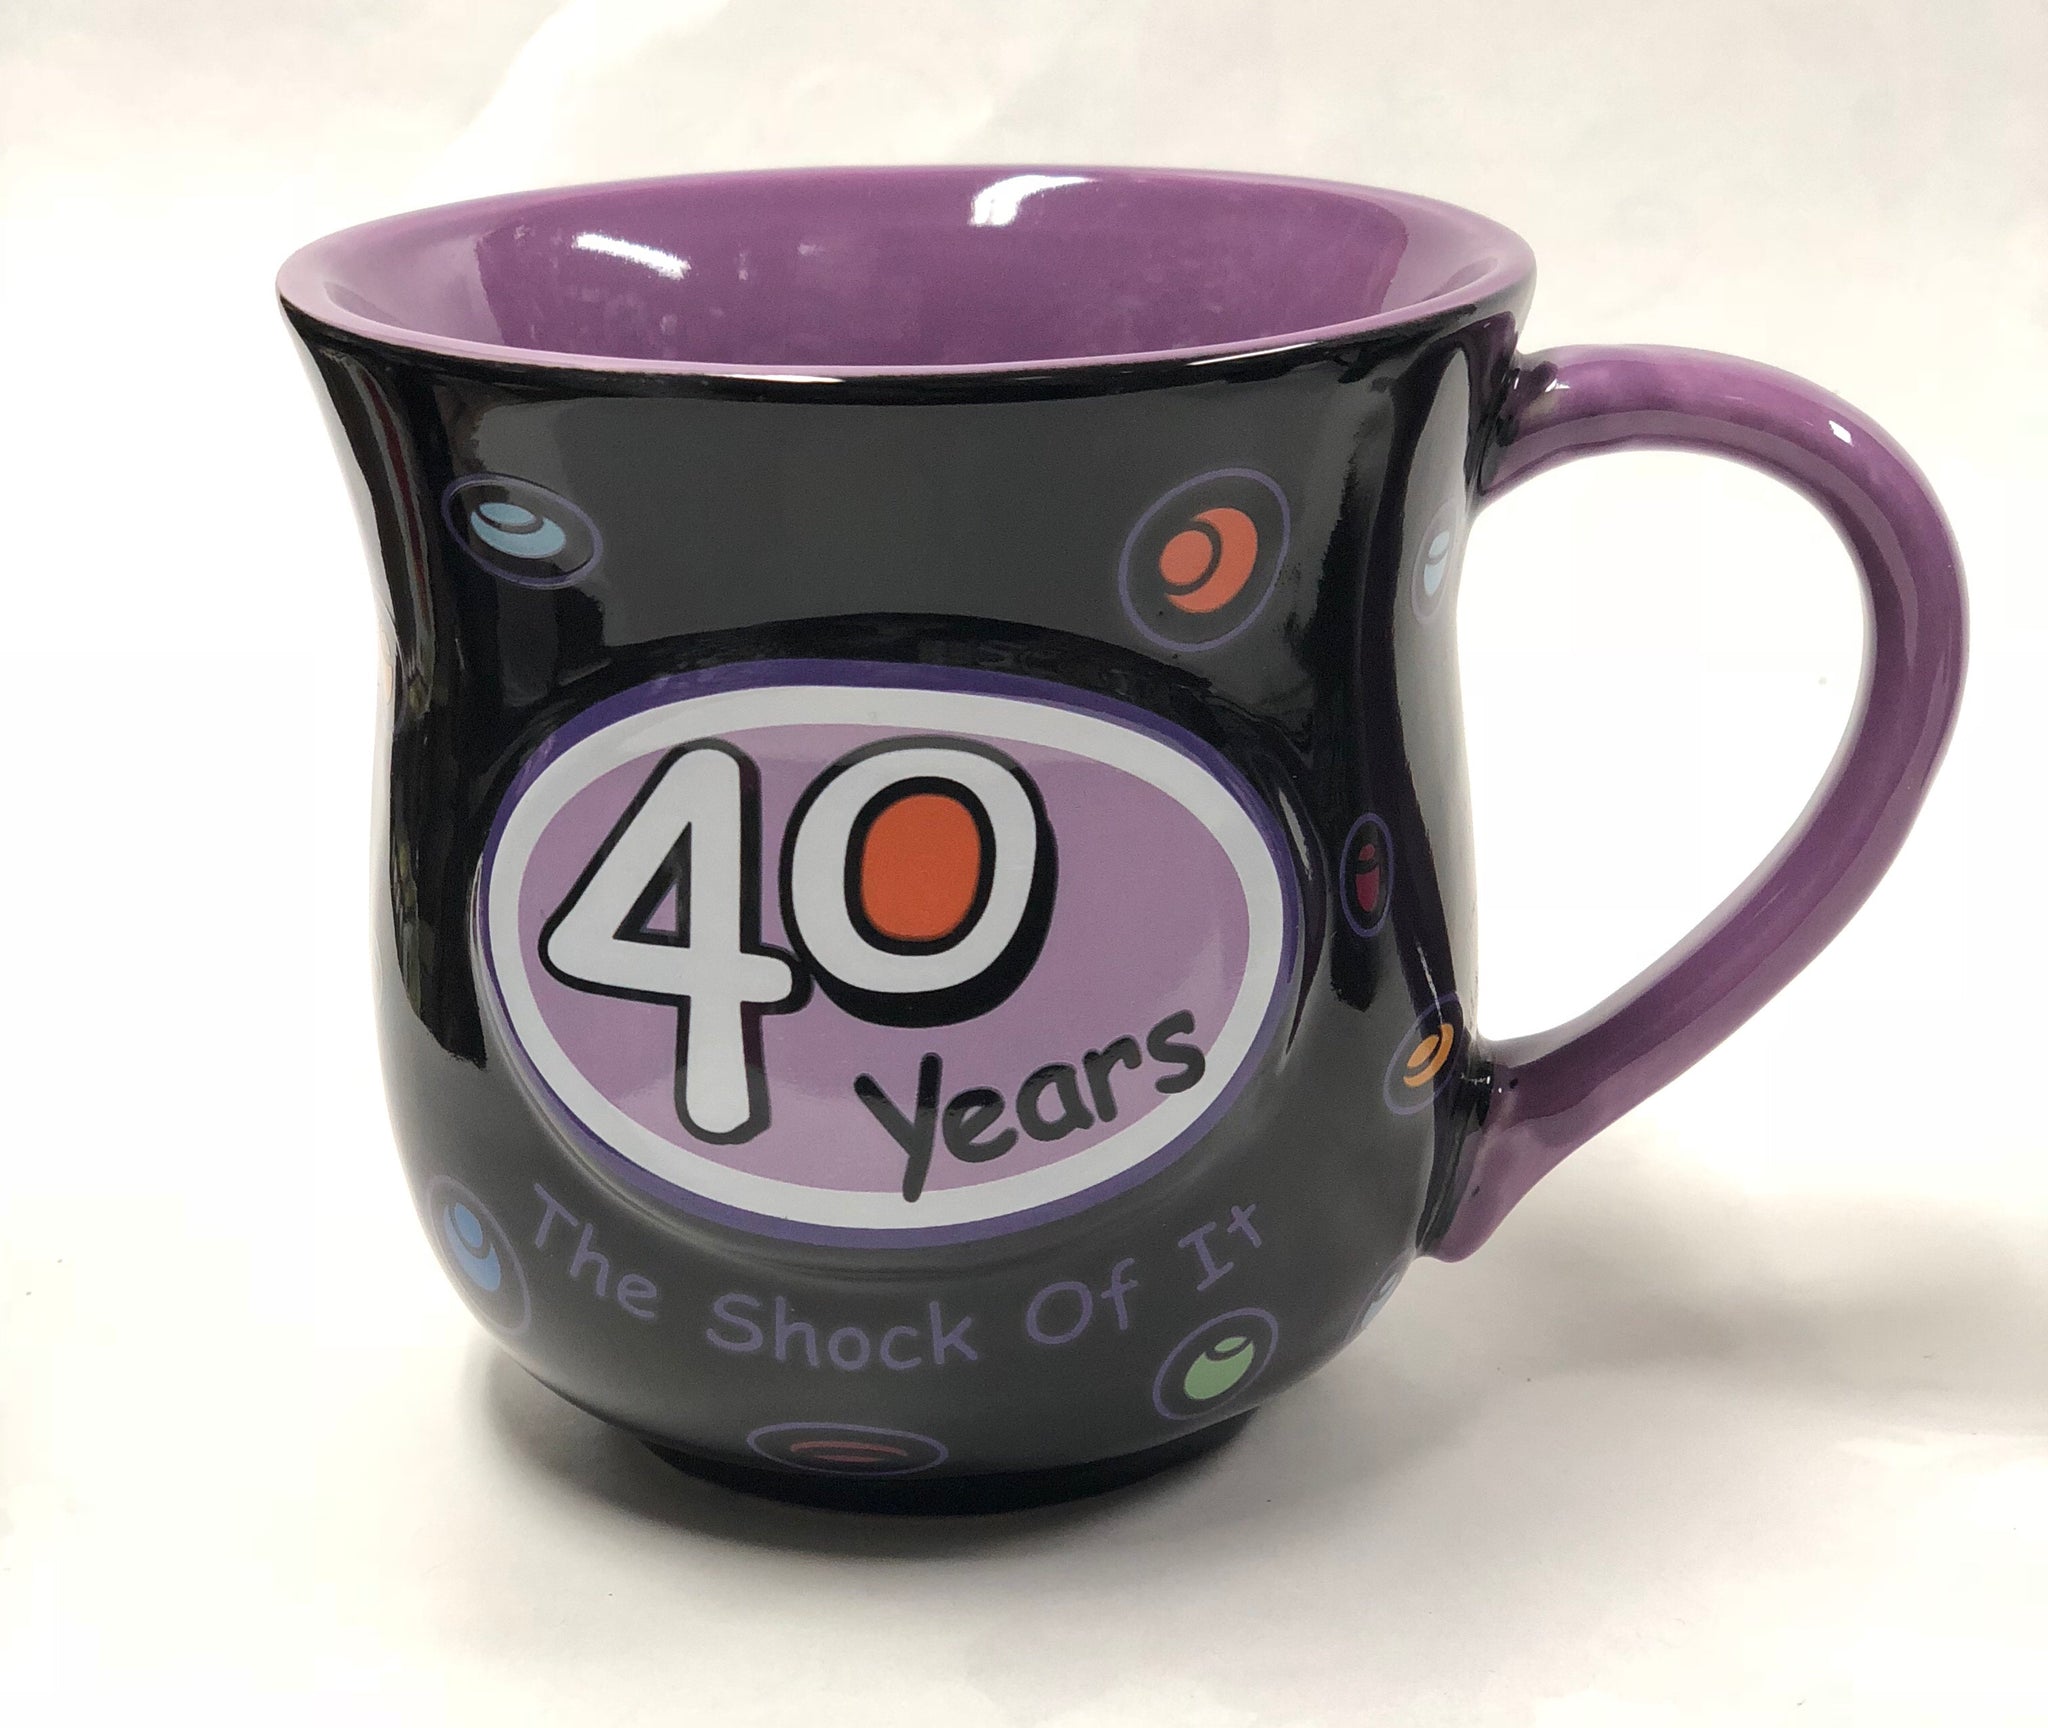 40 Year Shock Mug